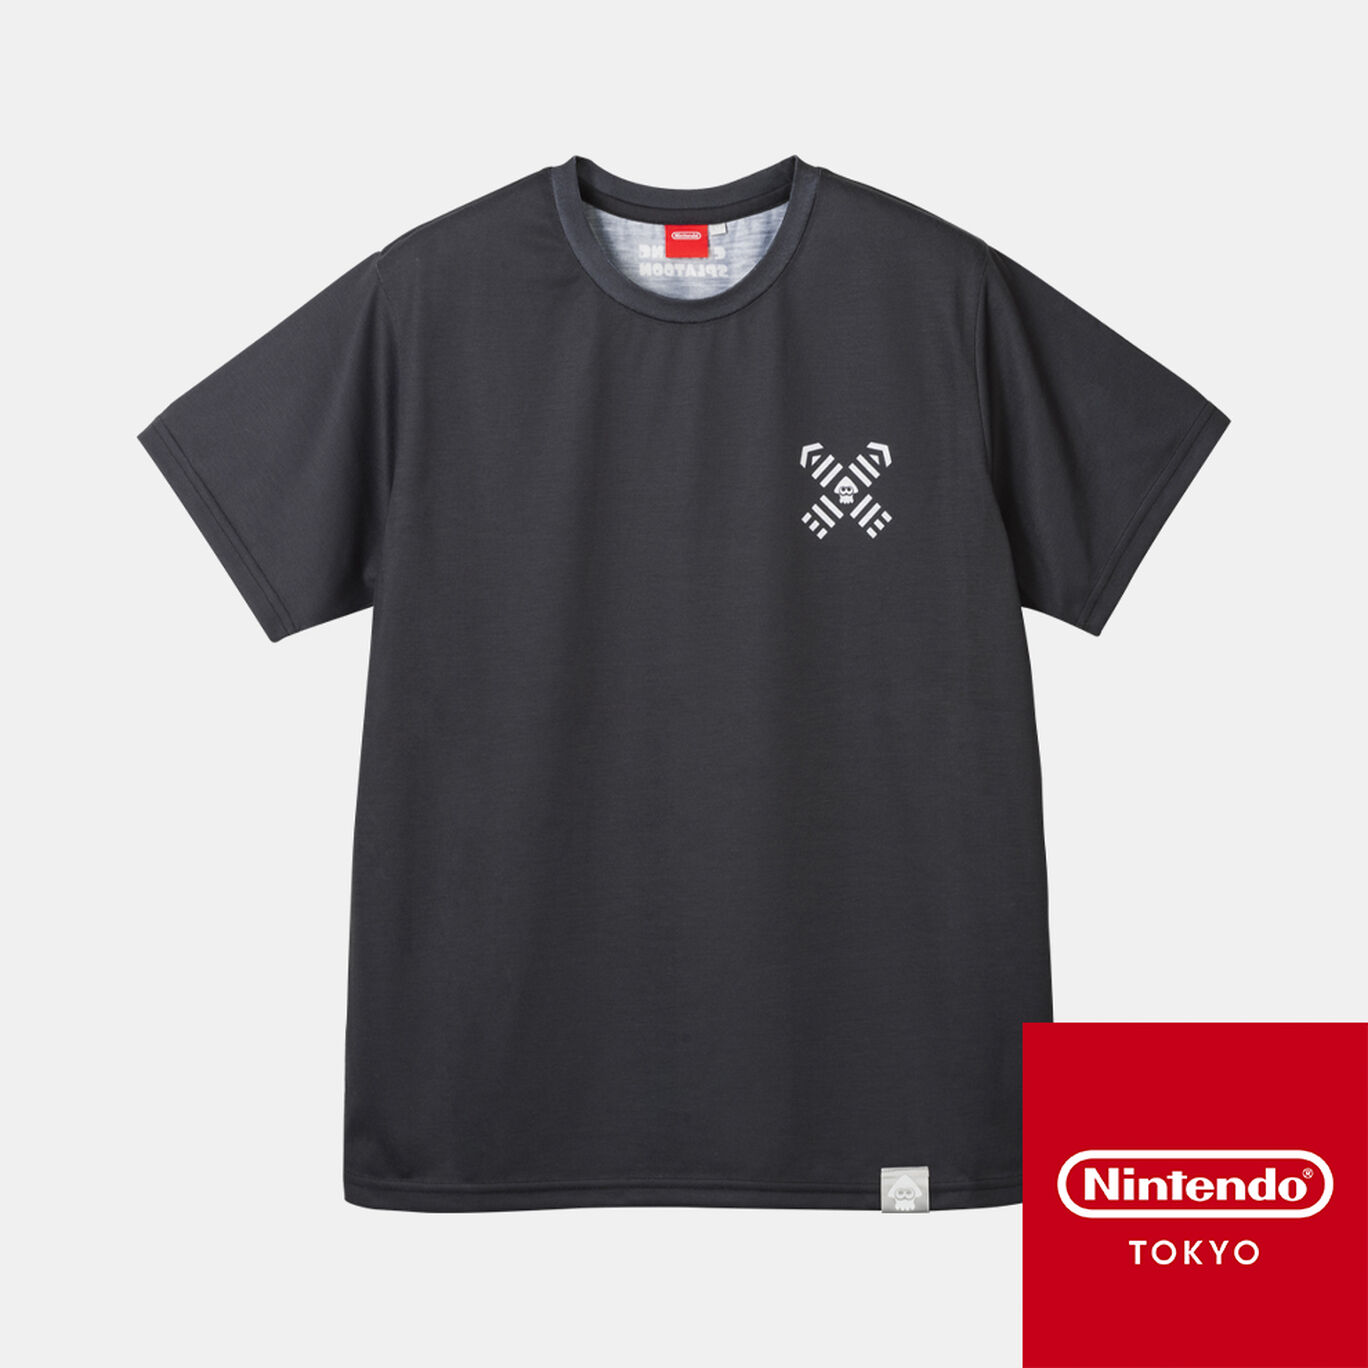 Tシャツ Crossing Splatoon B Nintendo Tokyo取り扱い商品 My Nintendo Store マイニンテンドーストア